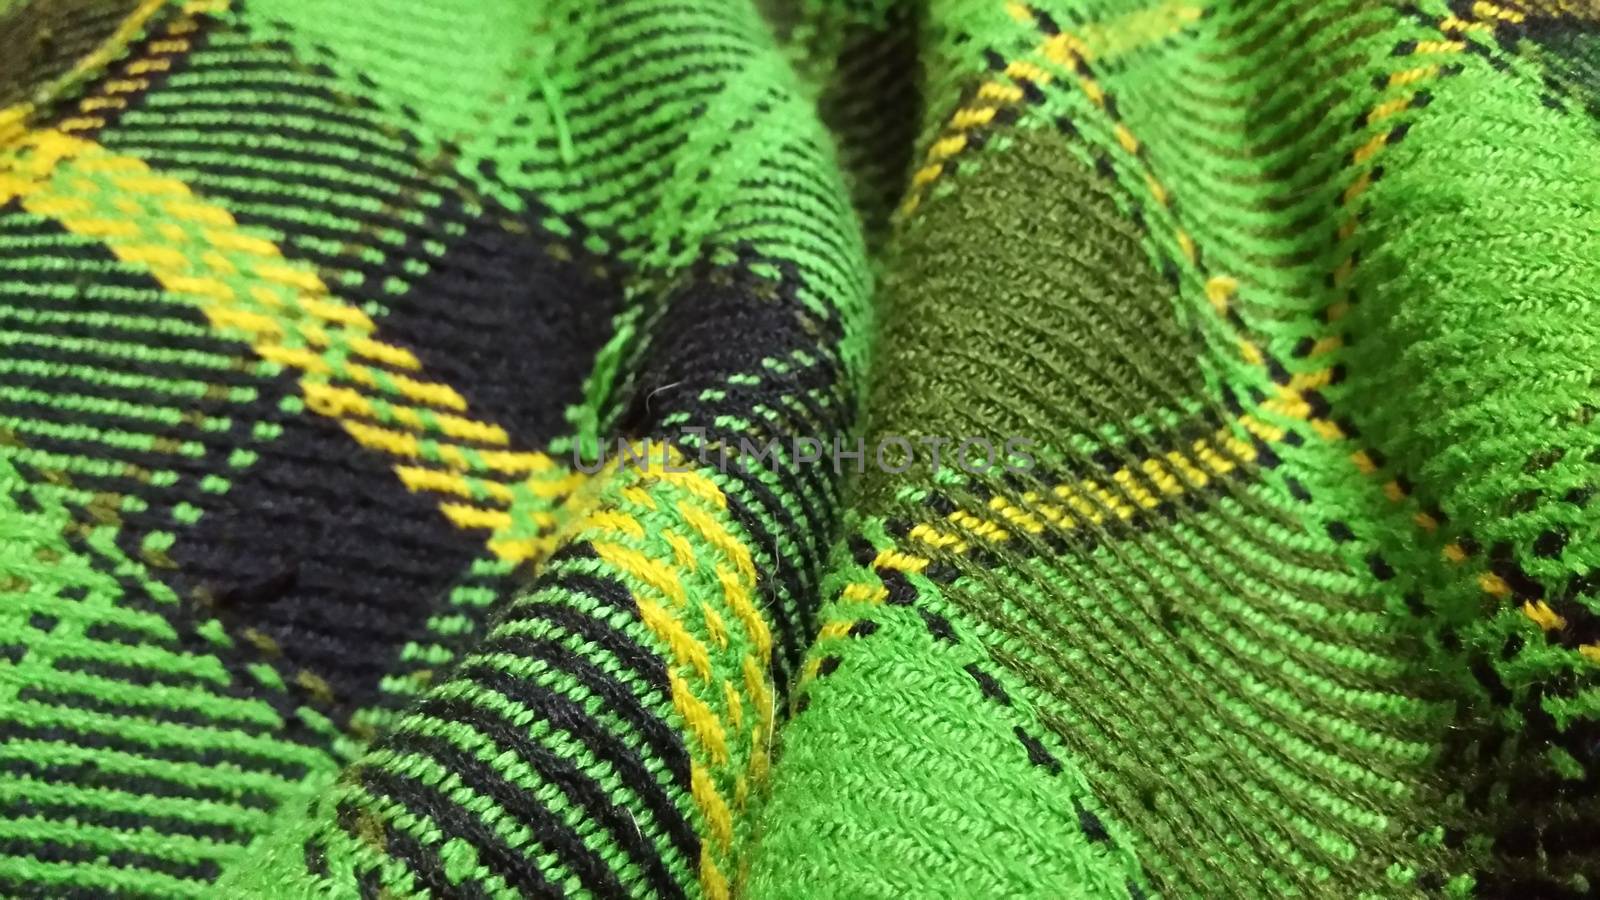 Green & Yellow Blanket by Sevenskyx